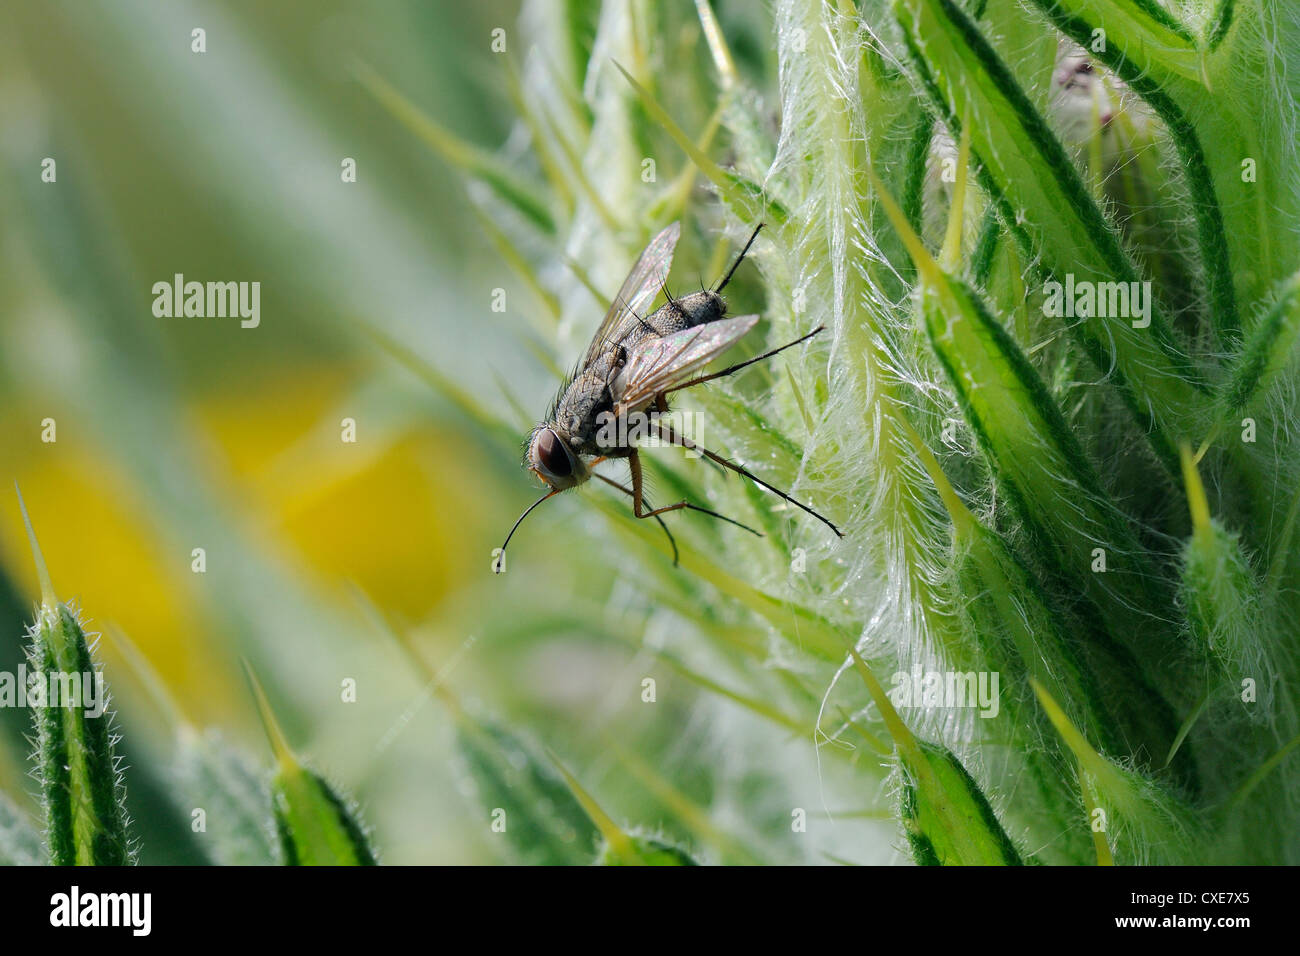 Parasite fly or Tachinid fly (Prosena siberita) with long proboscis, Wiltshire, England Stock Photo